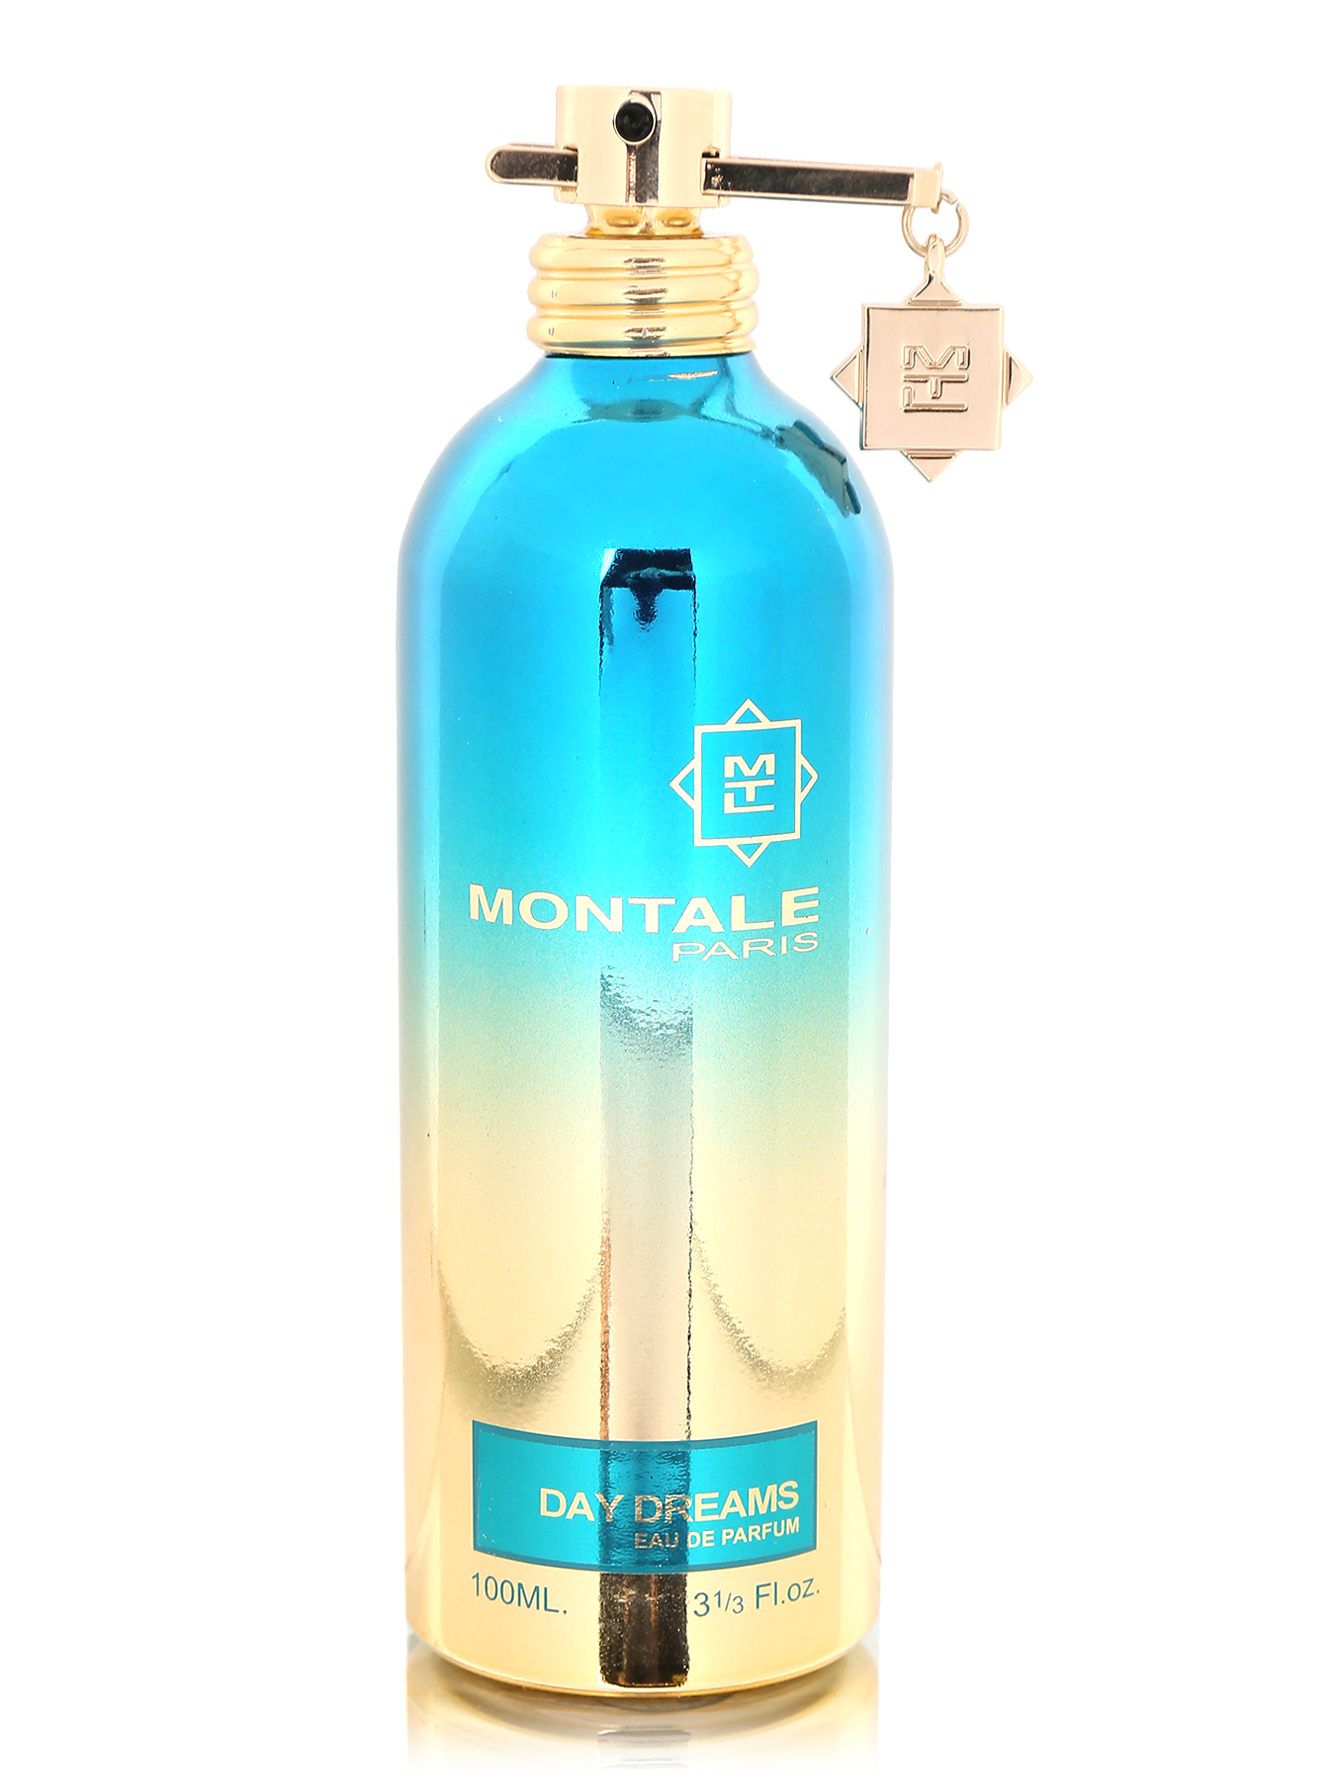 Montale dreams. Montale Day Dreams 100 ml. Montale Day Dreams парфюмерная вода тестер 100мл. Масляные арабские духи Монталь. Montale Aoud Dream.